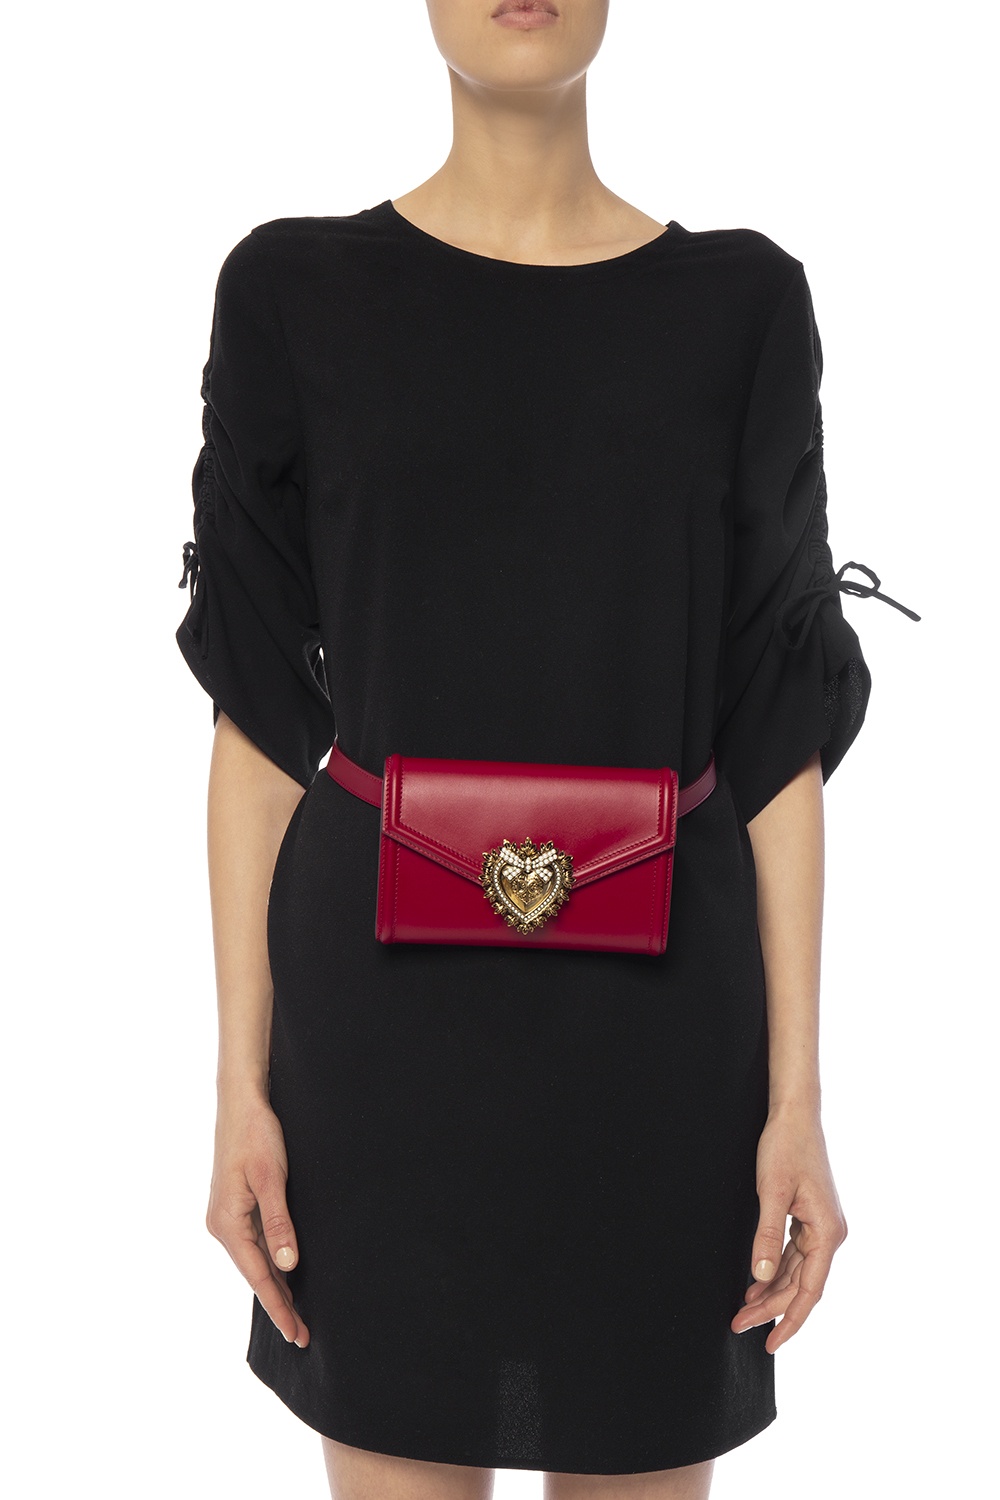 Red 'Devotion' belt bag Dolce & Gabbana - Vitkac France